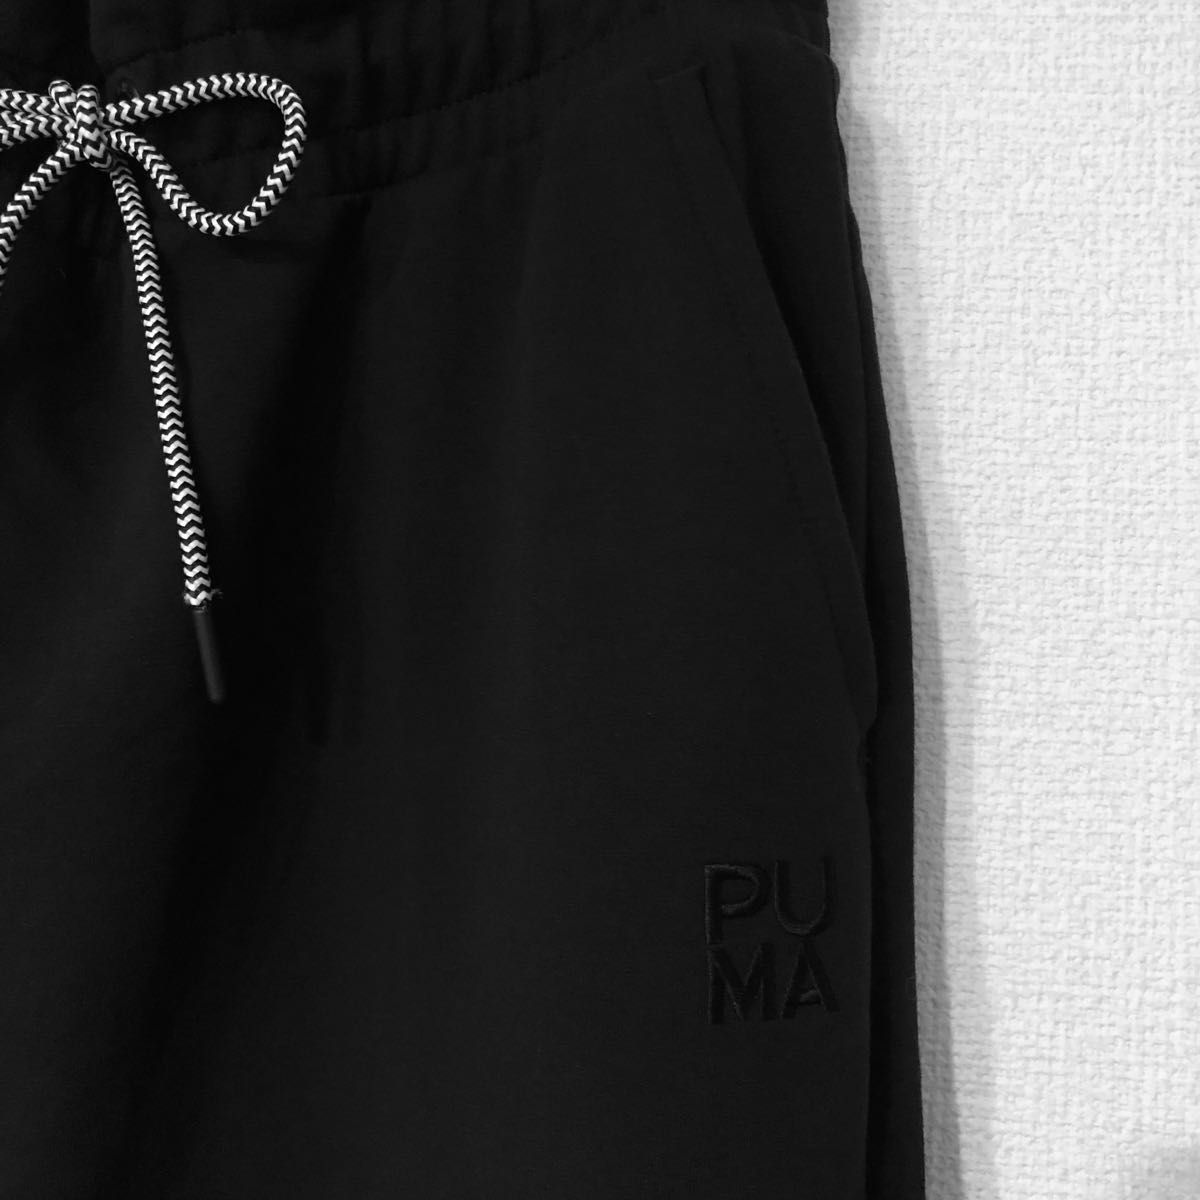 【PUMA】プーマ ロングスカート 黒 ブラック